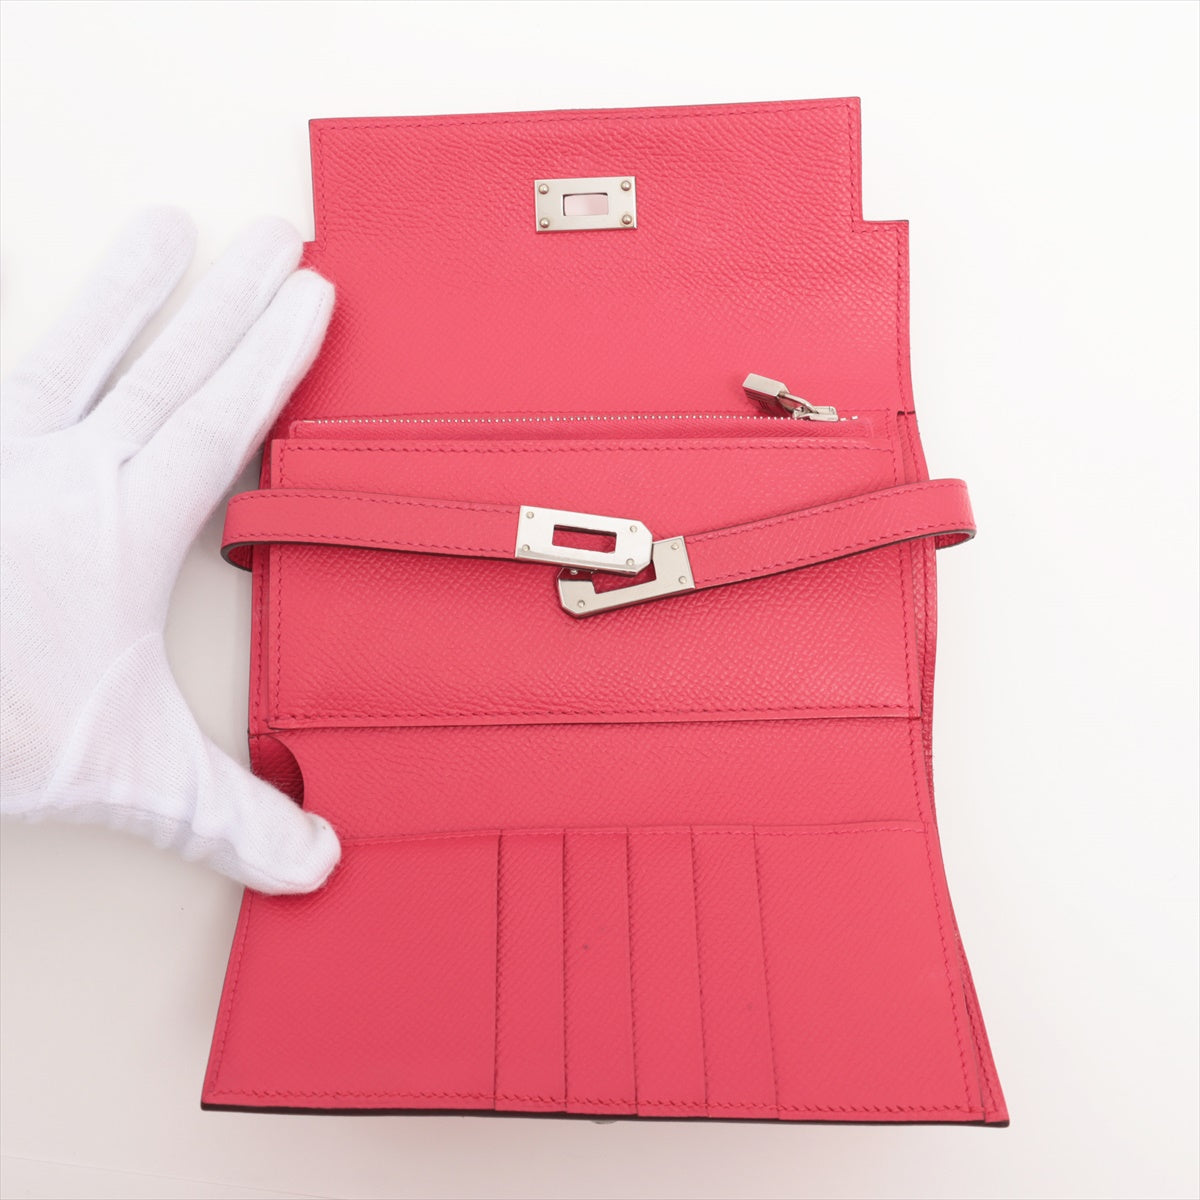 Hermès Kelly Medium Wallet Veau Epsom Compact Wallet Pink Silver Metal fittings A:2017